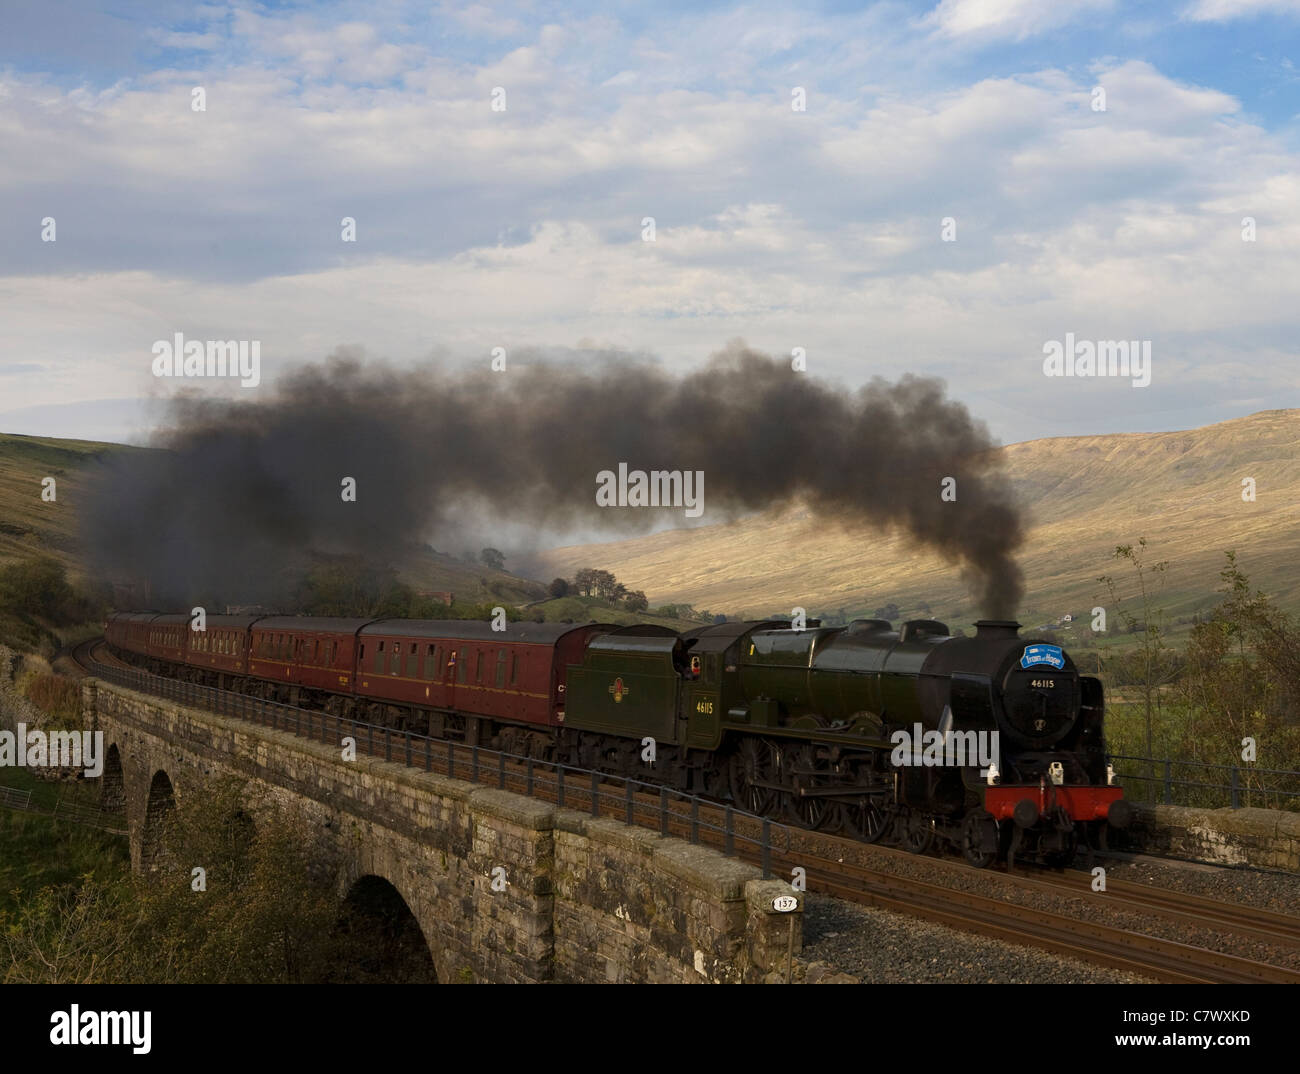 diesel locomotive train trains rail railway railways steam engine restored track passenger carriage carriages Stock Photo